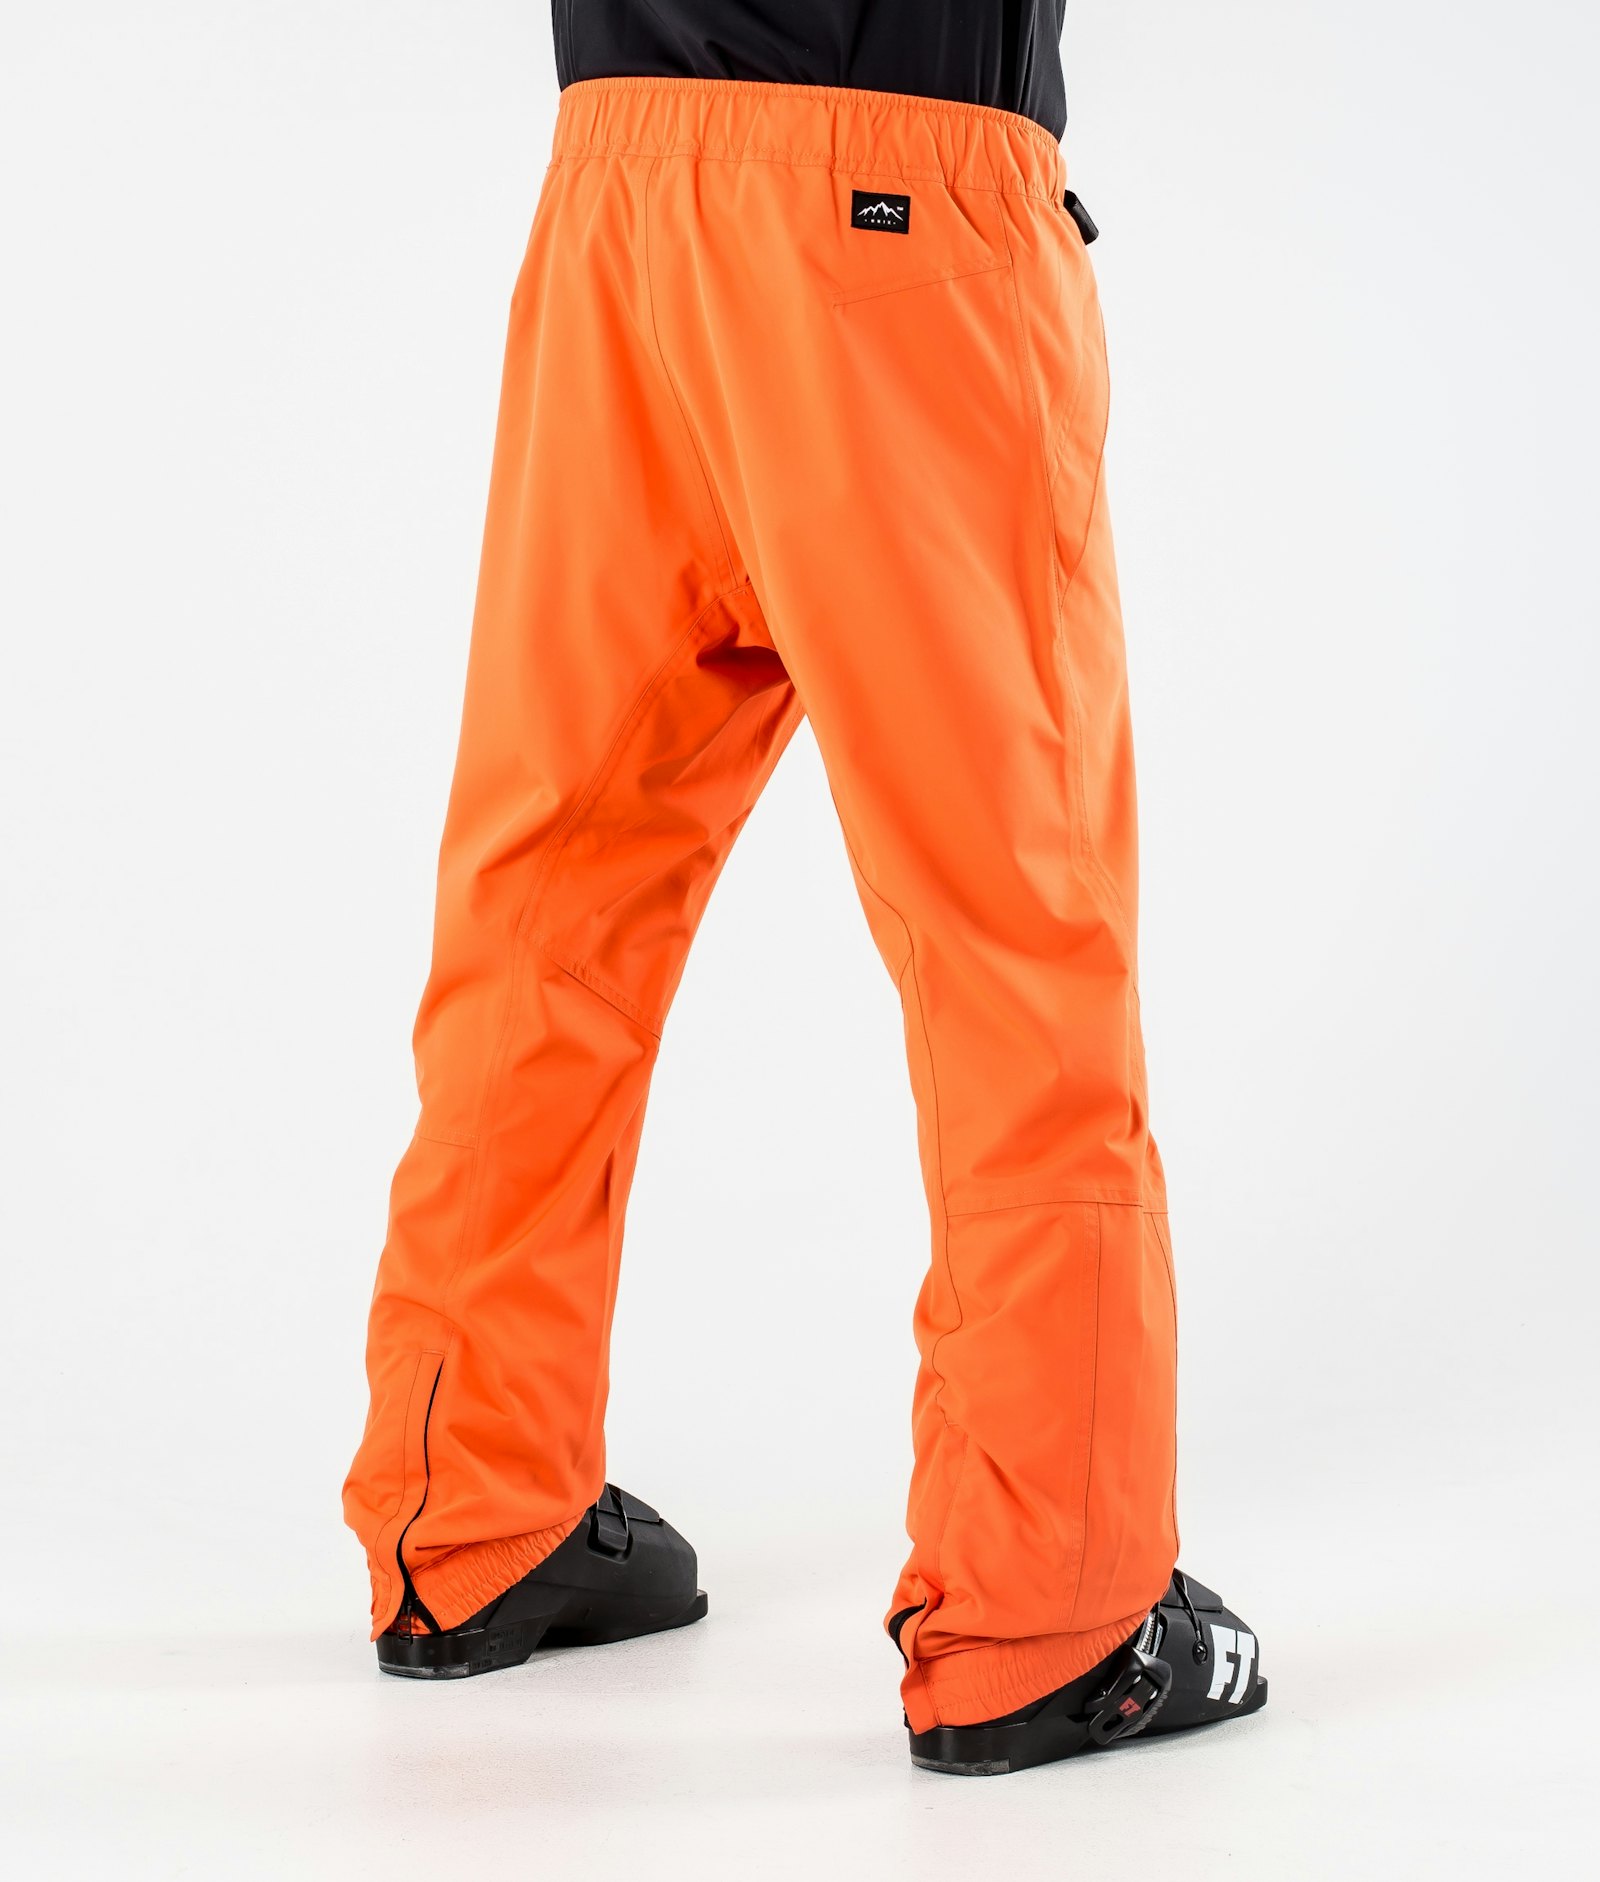 Blizzard 2020 Pantalon de Ski Homme Orange